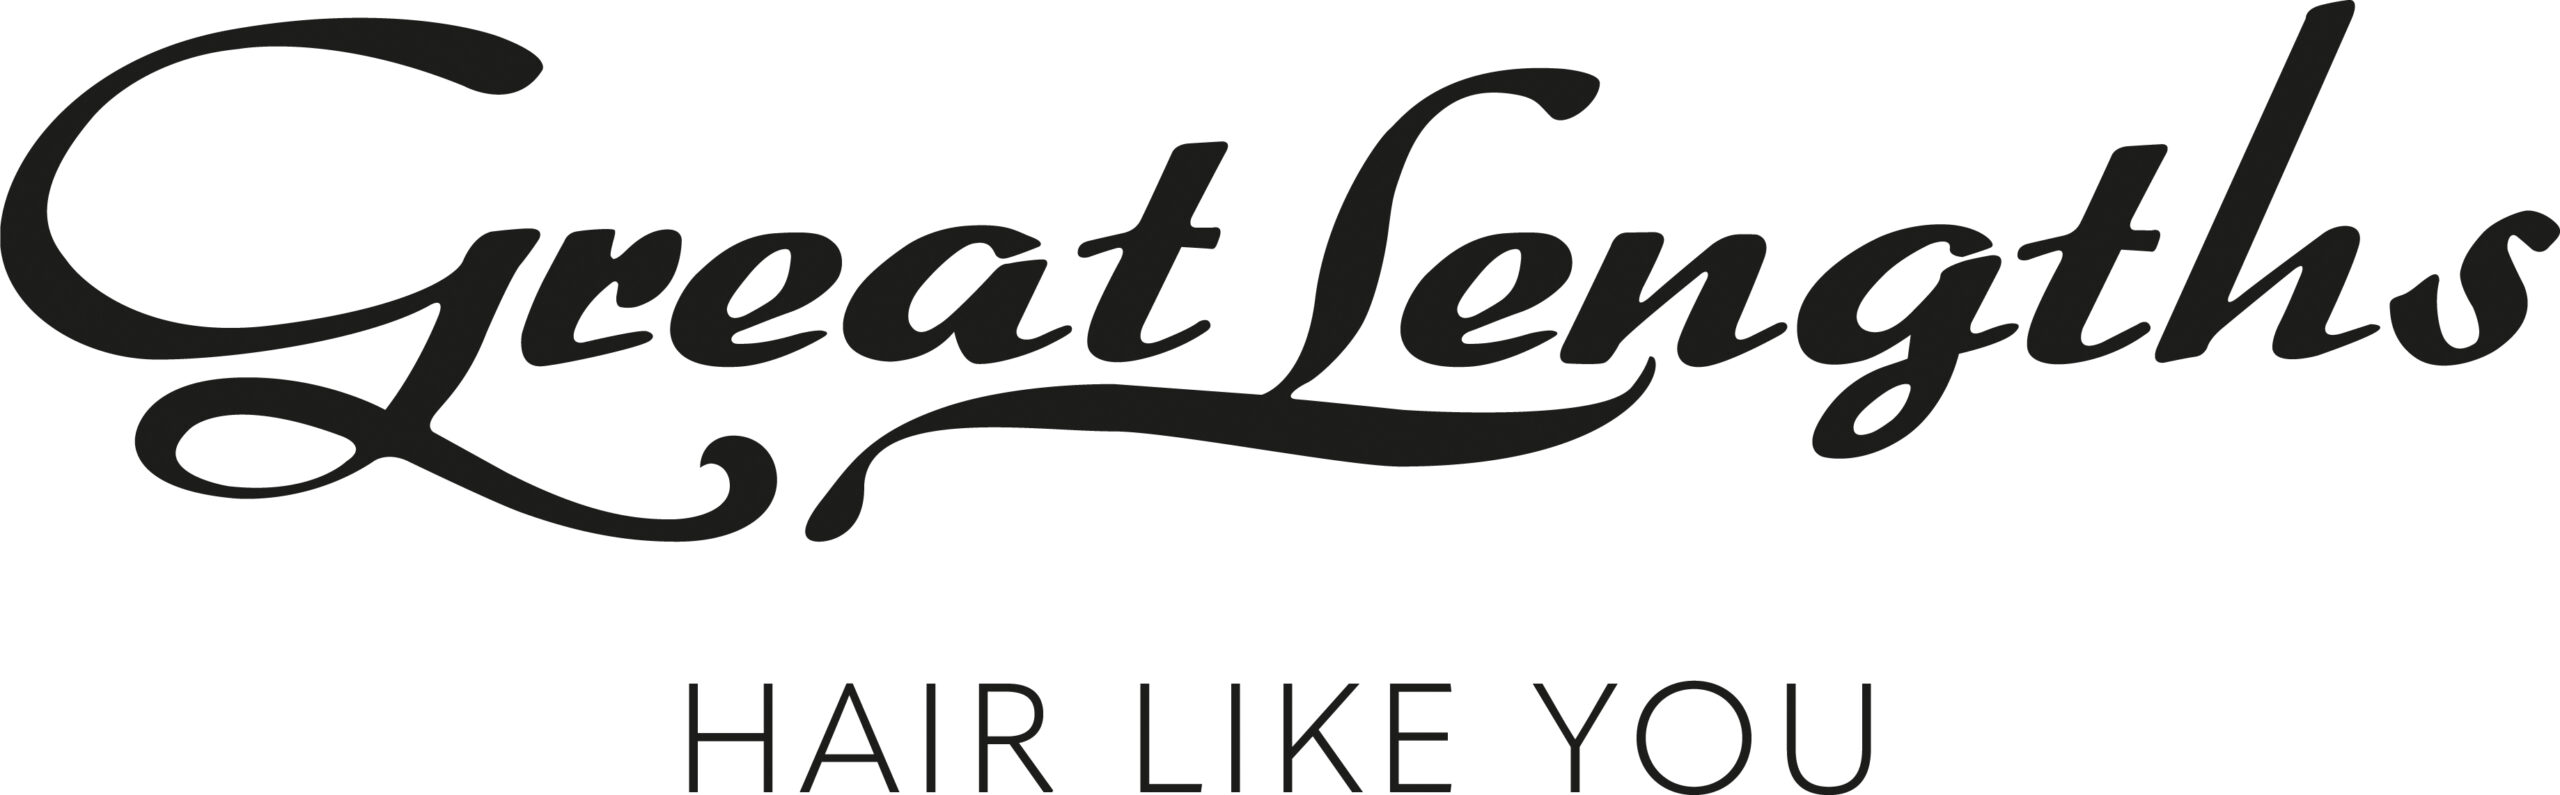 Great Lengths - Hair Like You Logo 2020